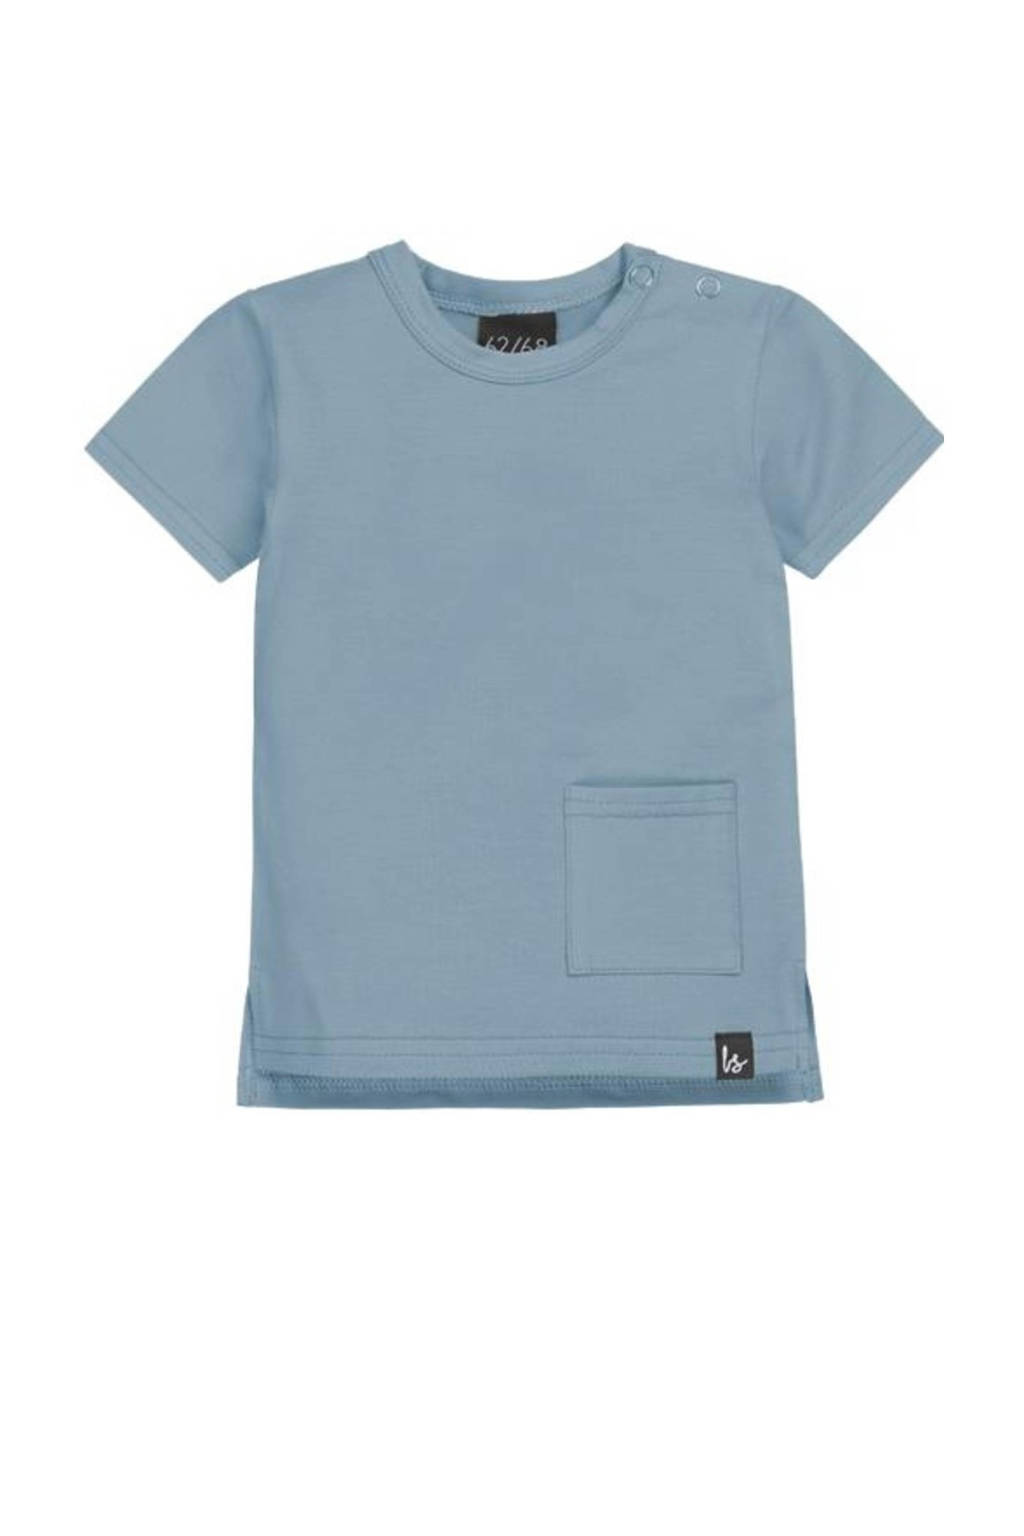 Babystyling T-shirt blauw